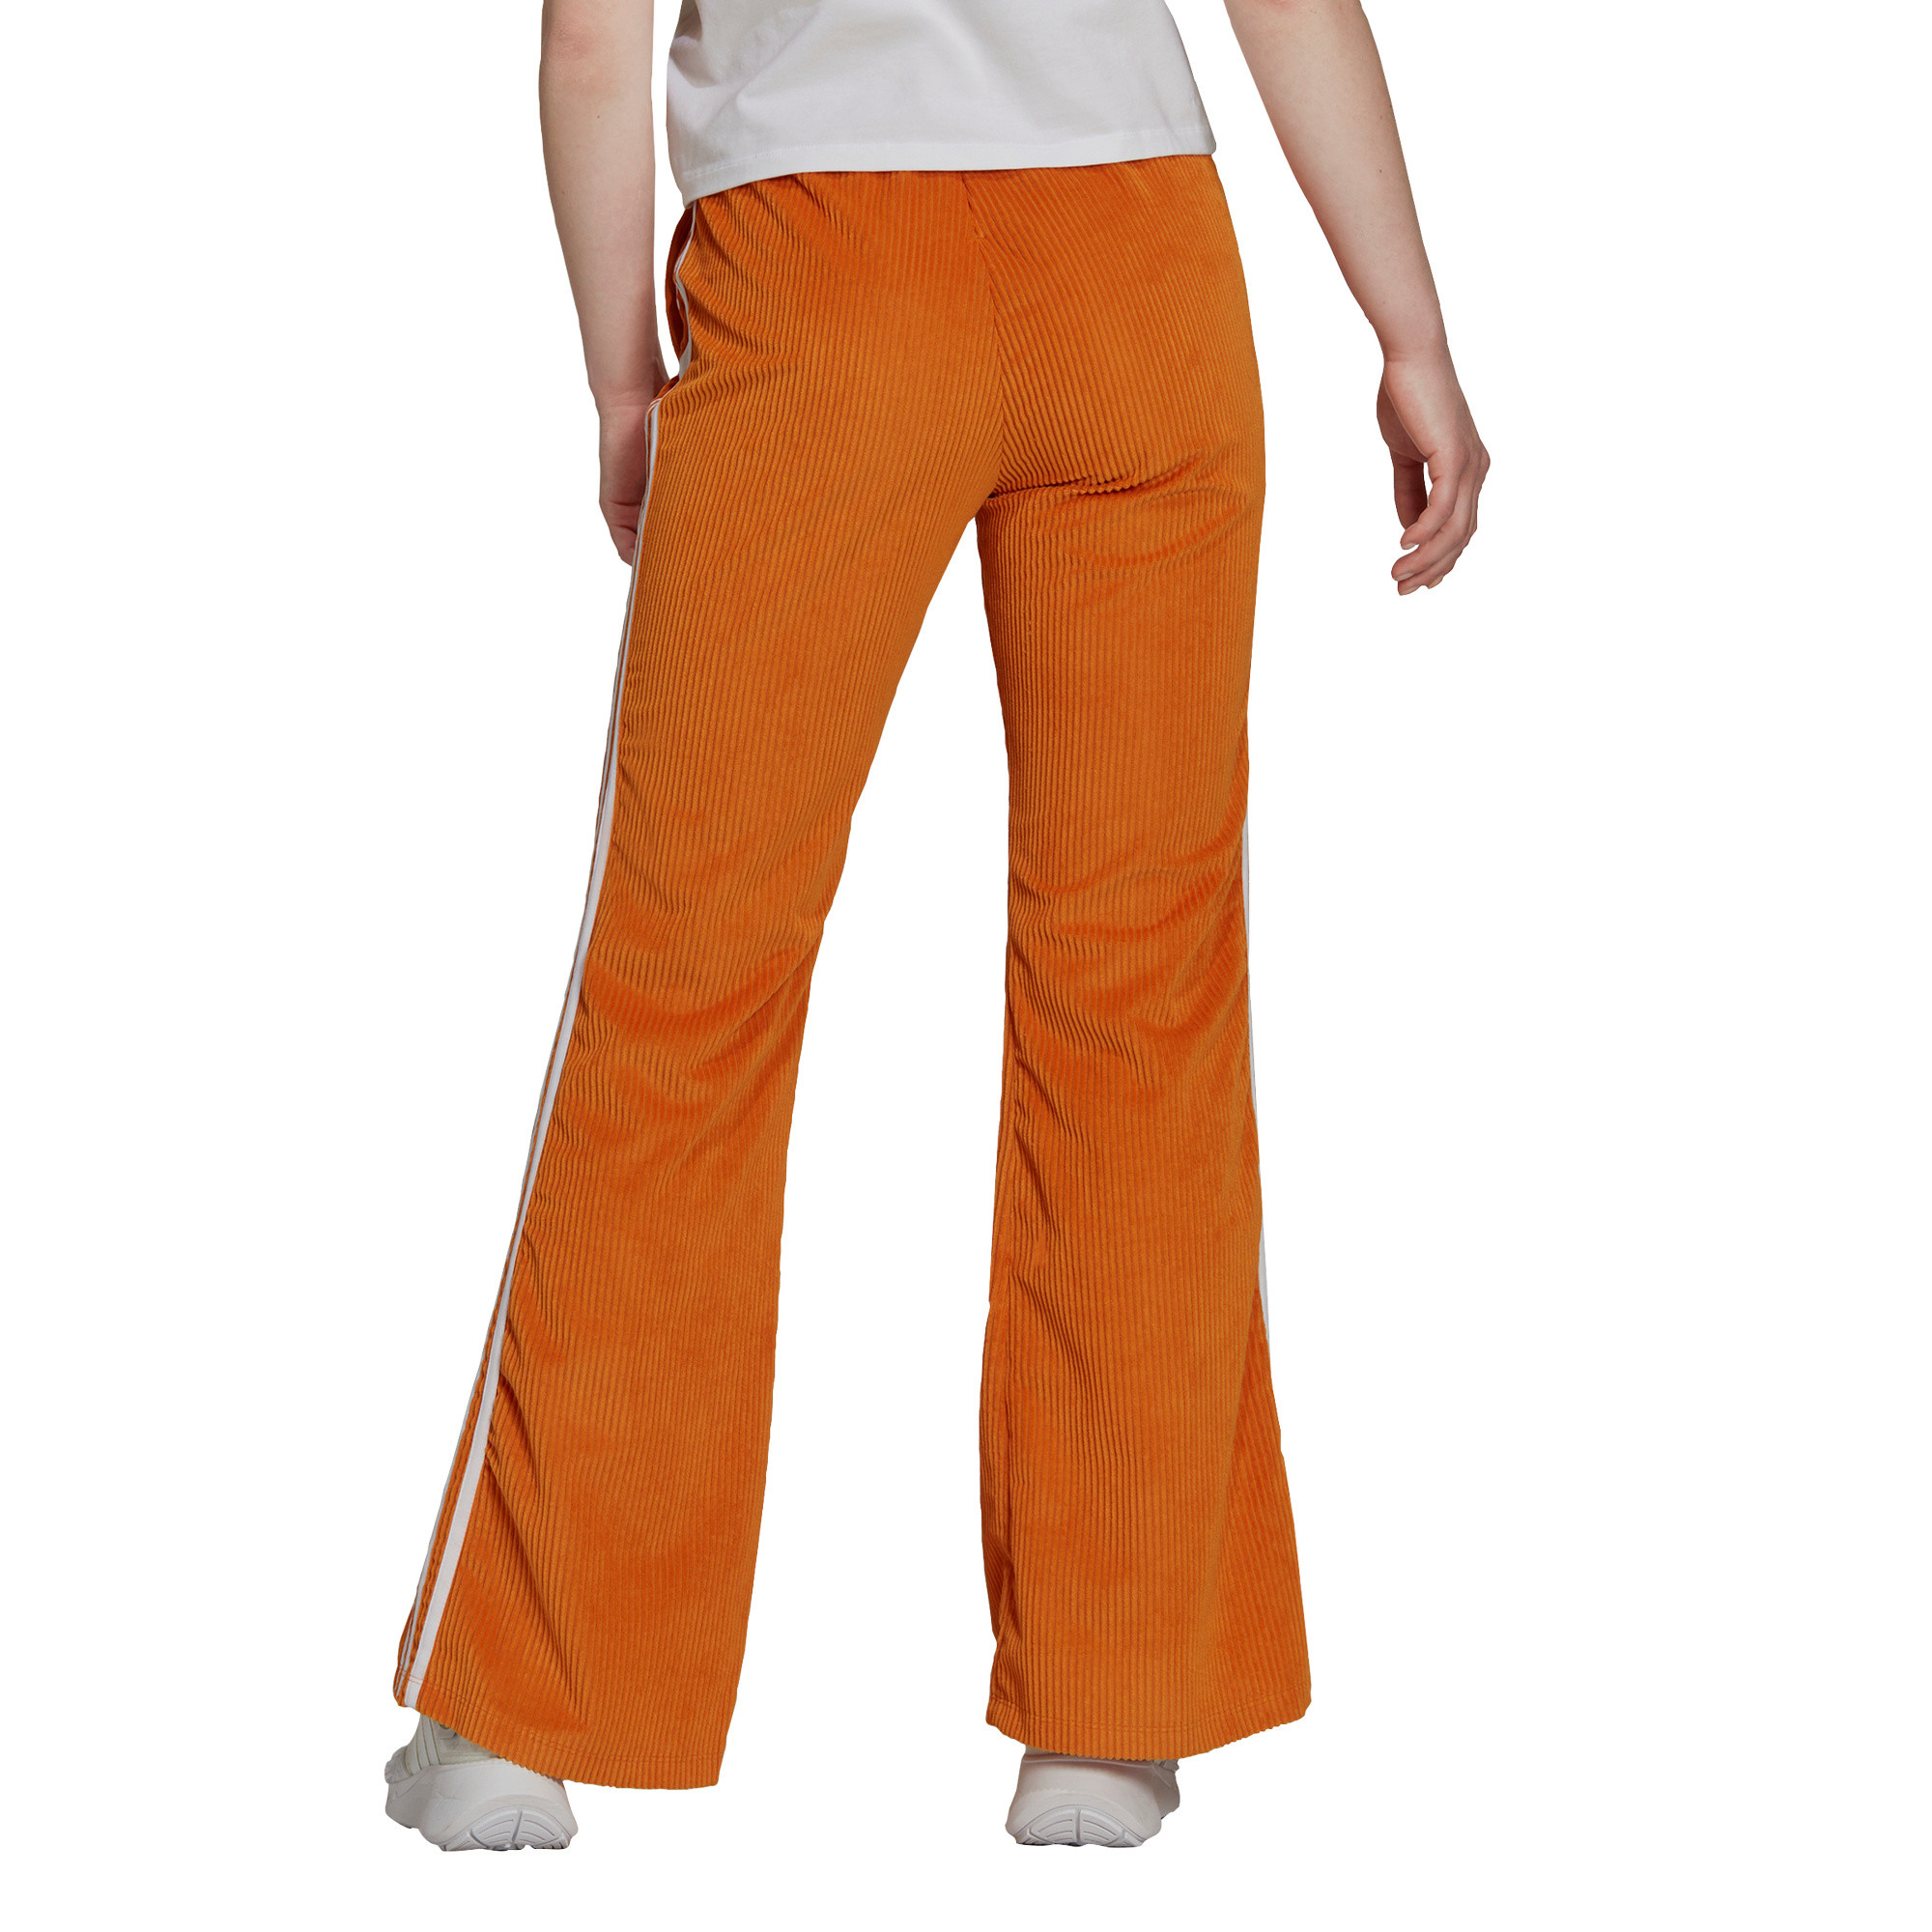 Relaxed Pant, Orange, large image number 5